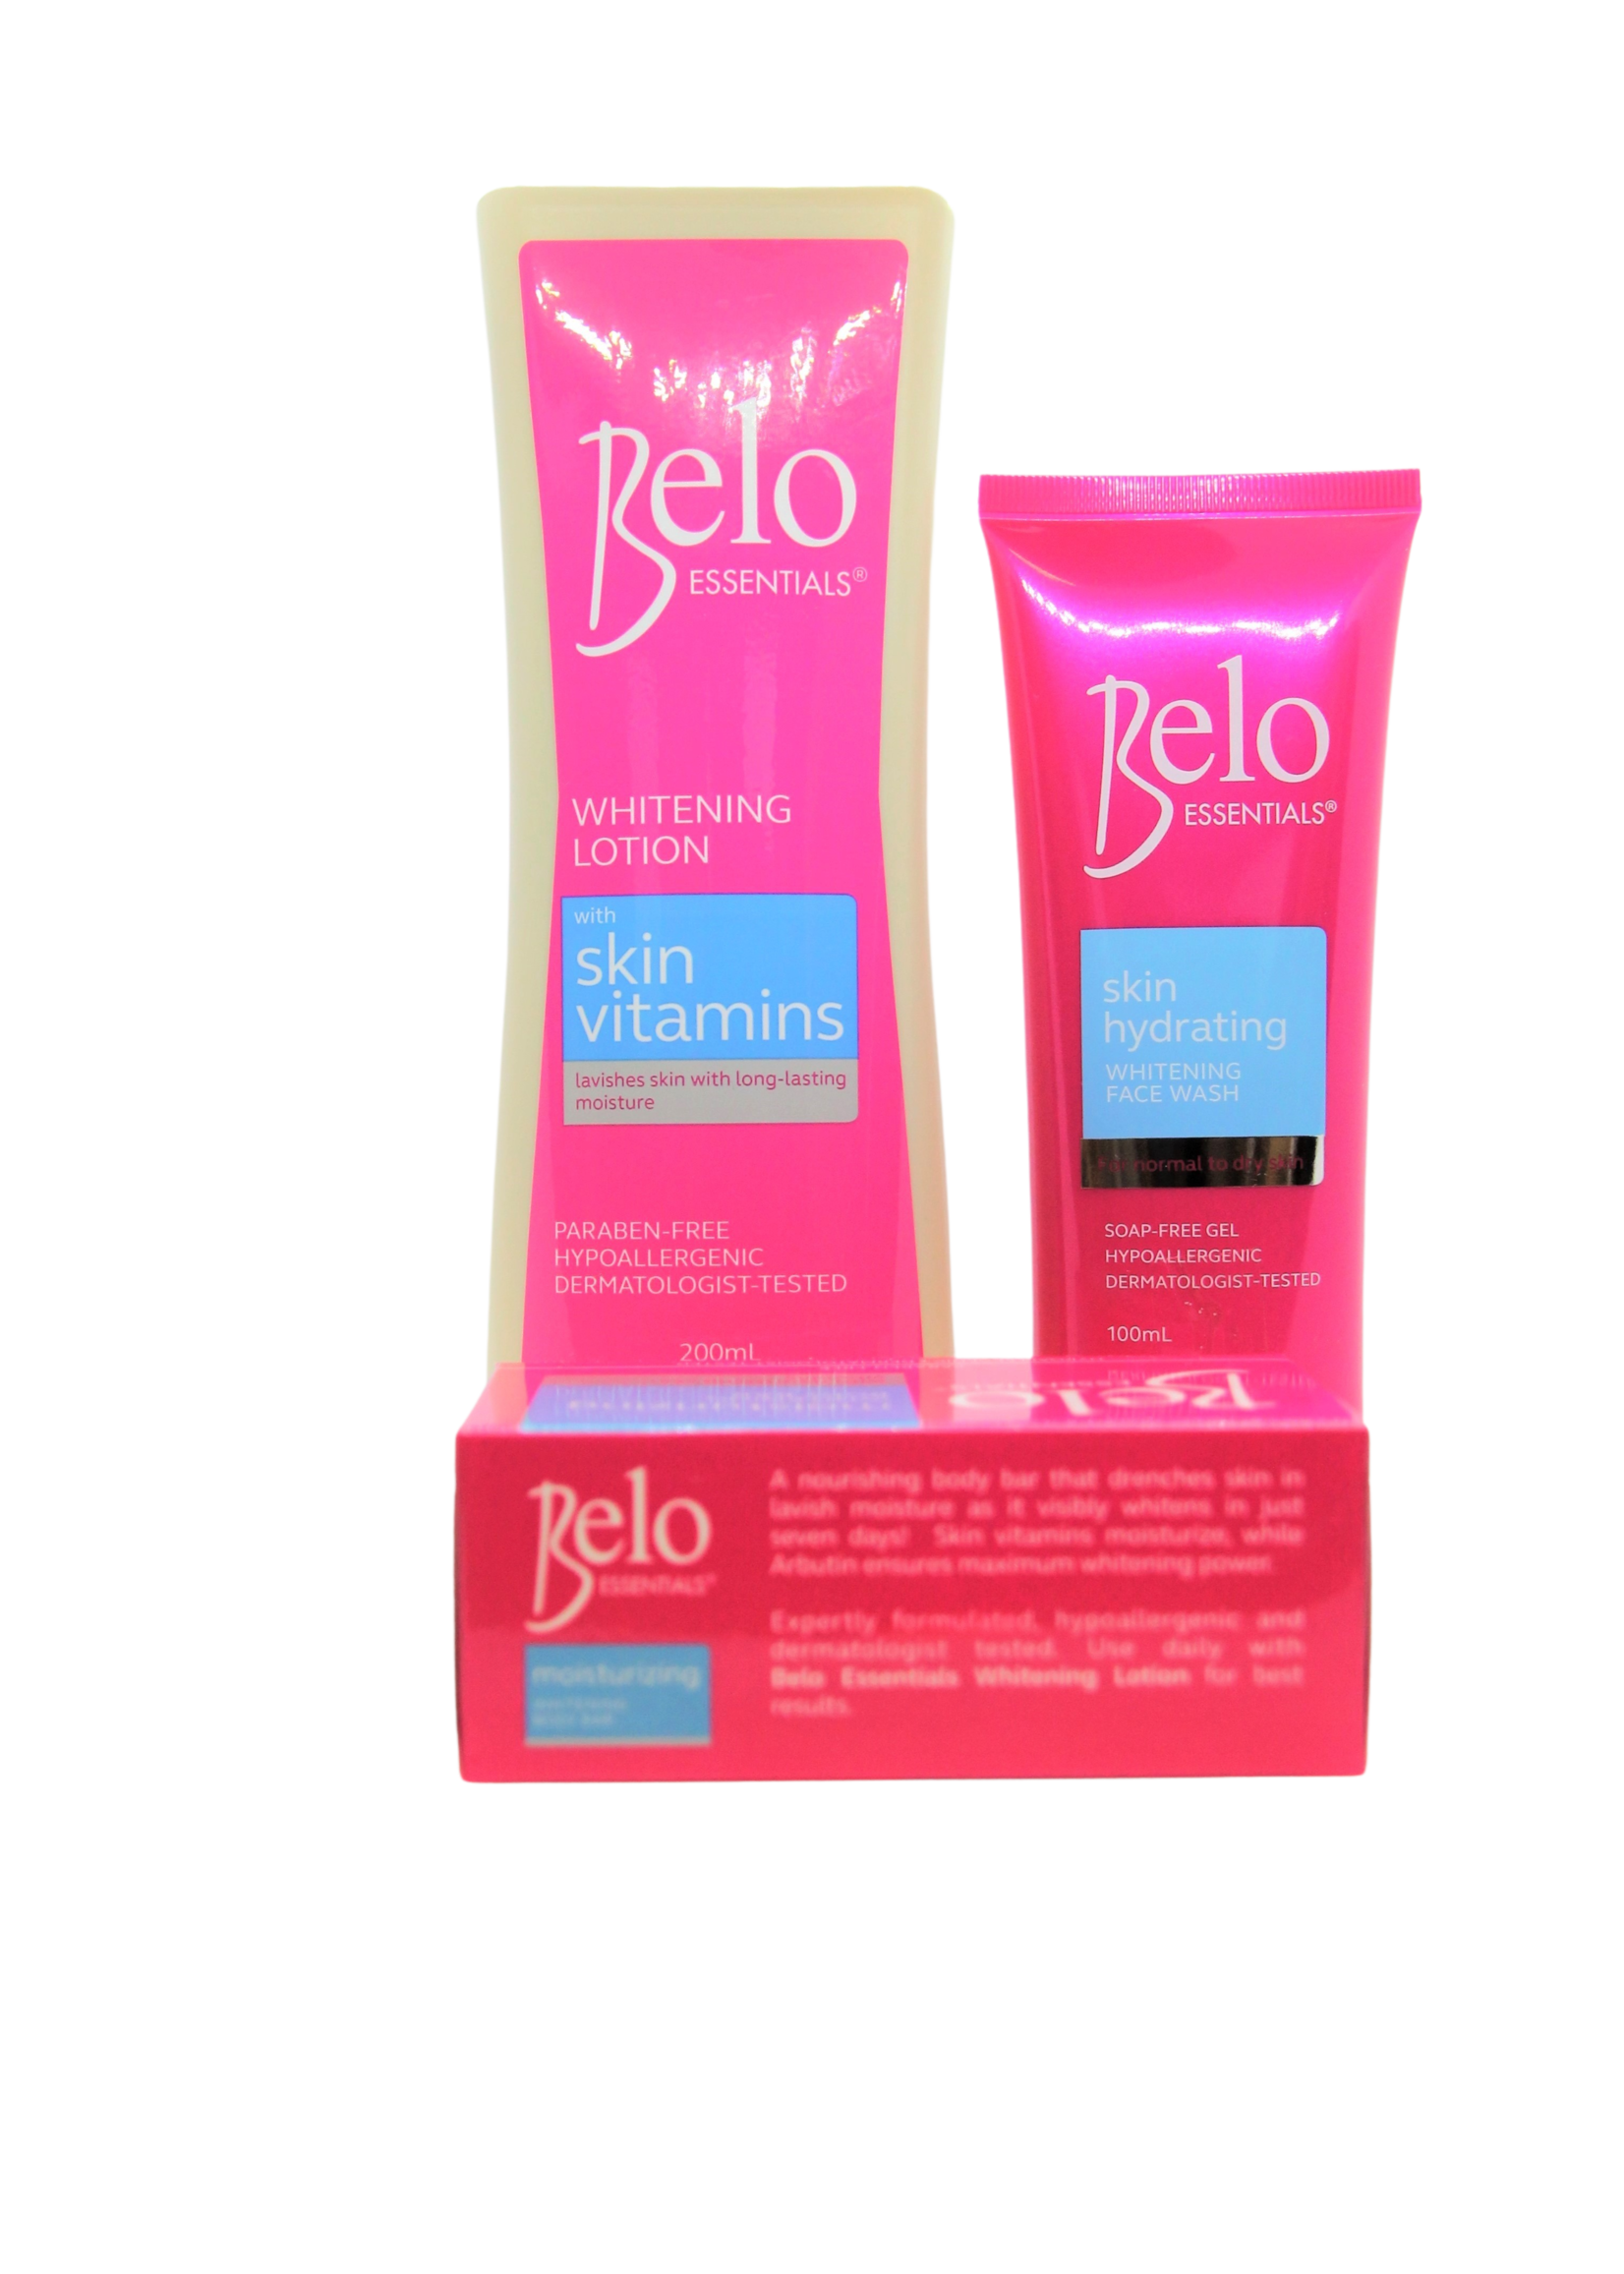 Belo Essentials moisturizing and whitening benefit package